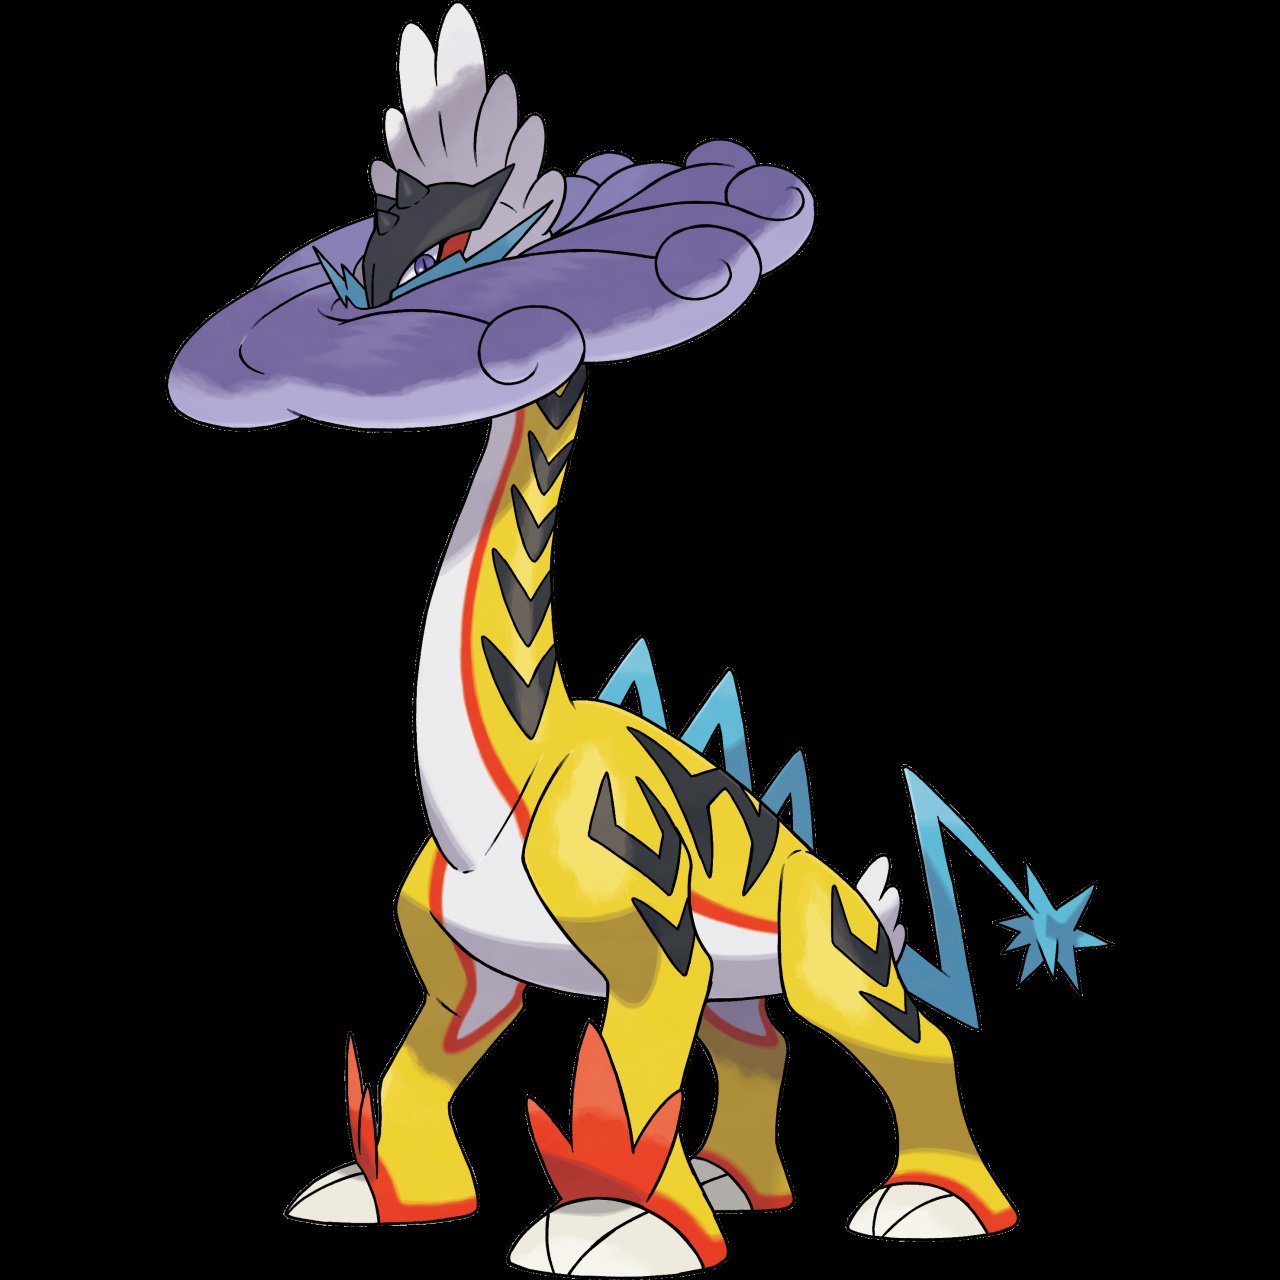 Raging Bolt and Iron Crown — Pokémon Scarlet and Pokémon Violet